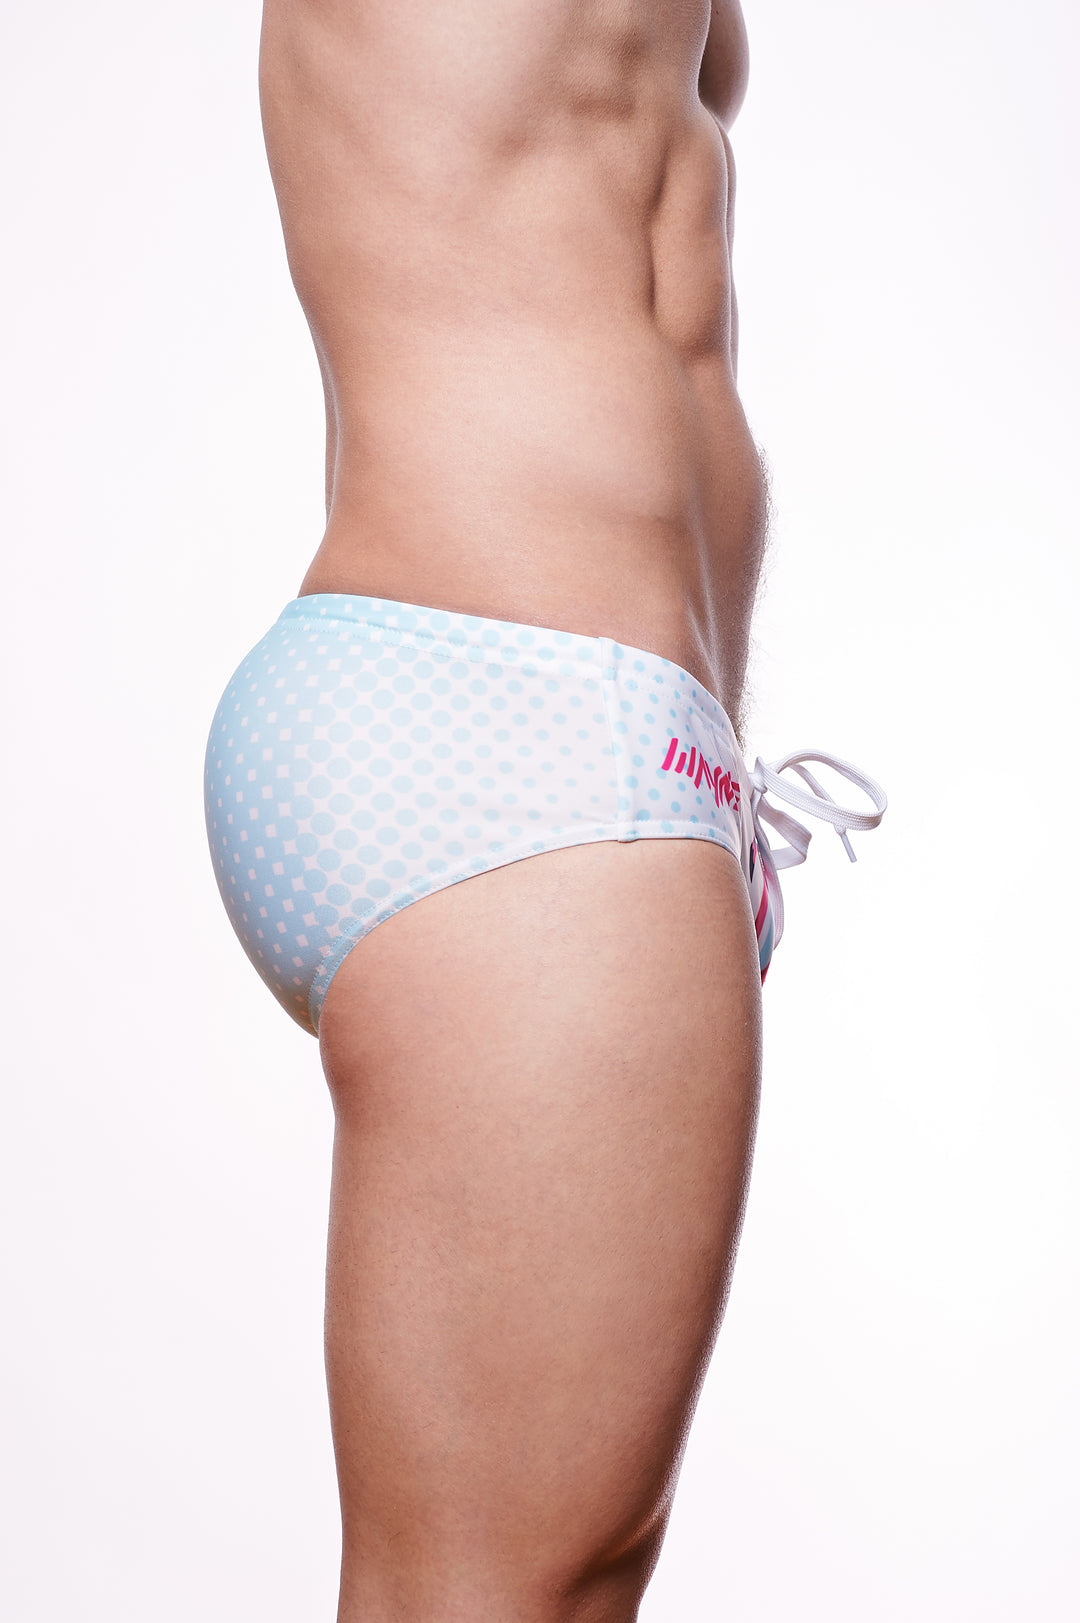 Wayne Flamingo Paradise Speedo - Underwear Expert